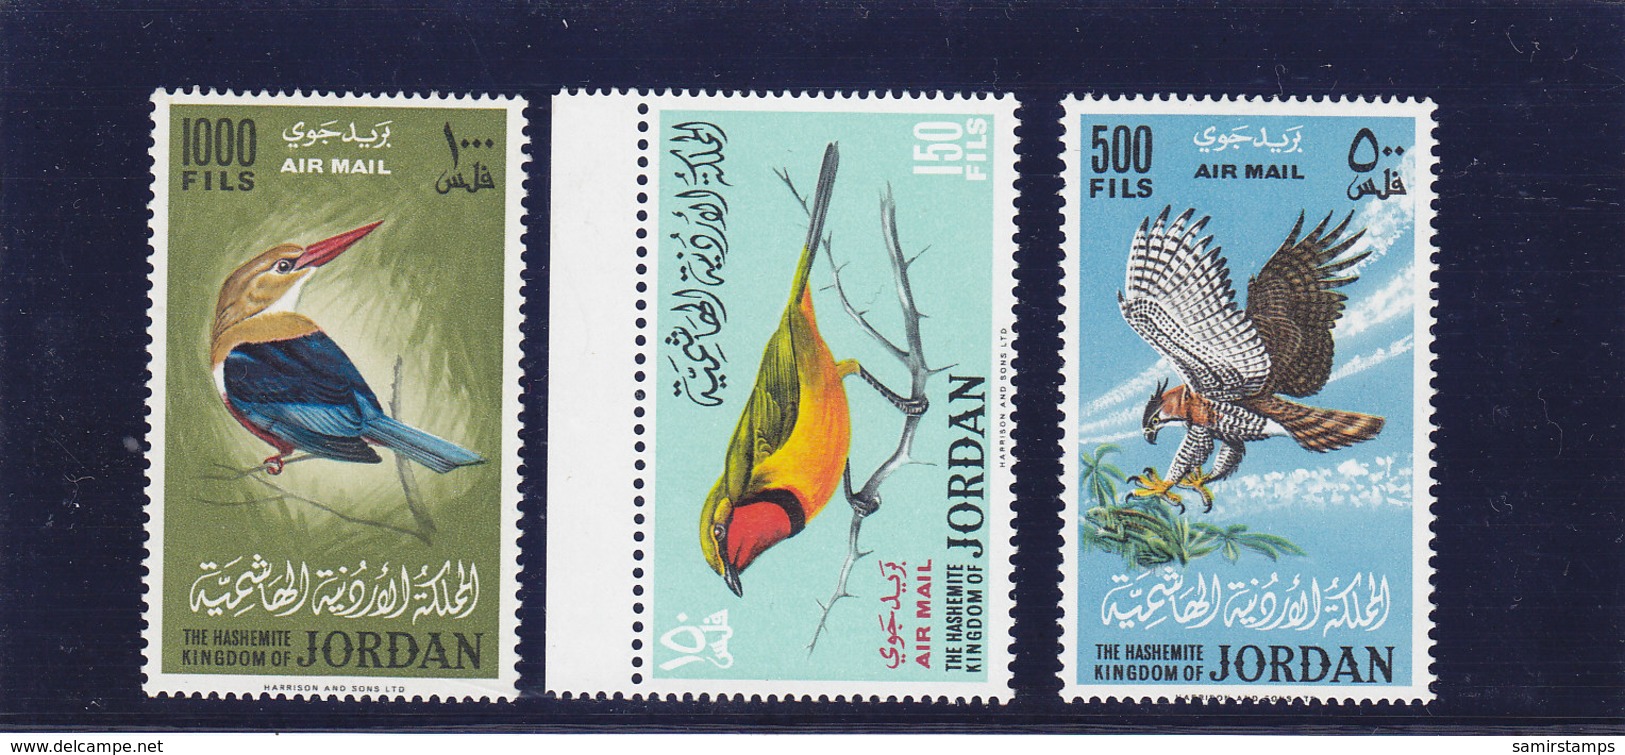 Jordan Auir Mail Brids 1964 3 Stamps Complete Set MNH Superb, Exctr.rare Topical Set- Red. Price- SKRILL PAYMENT ONLY - Jordan